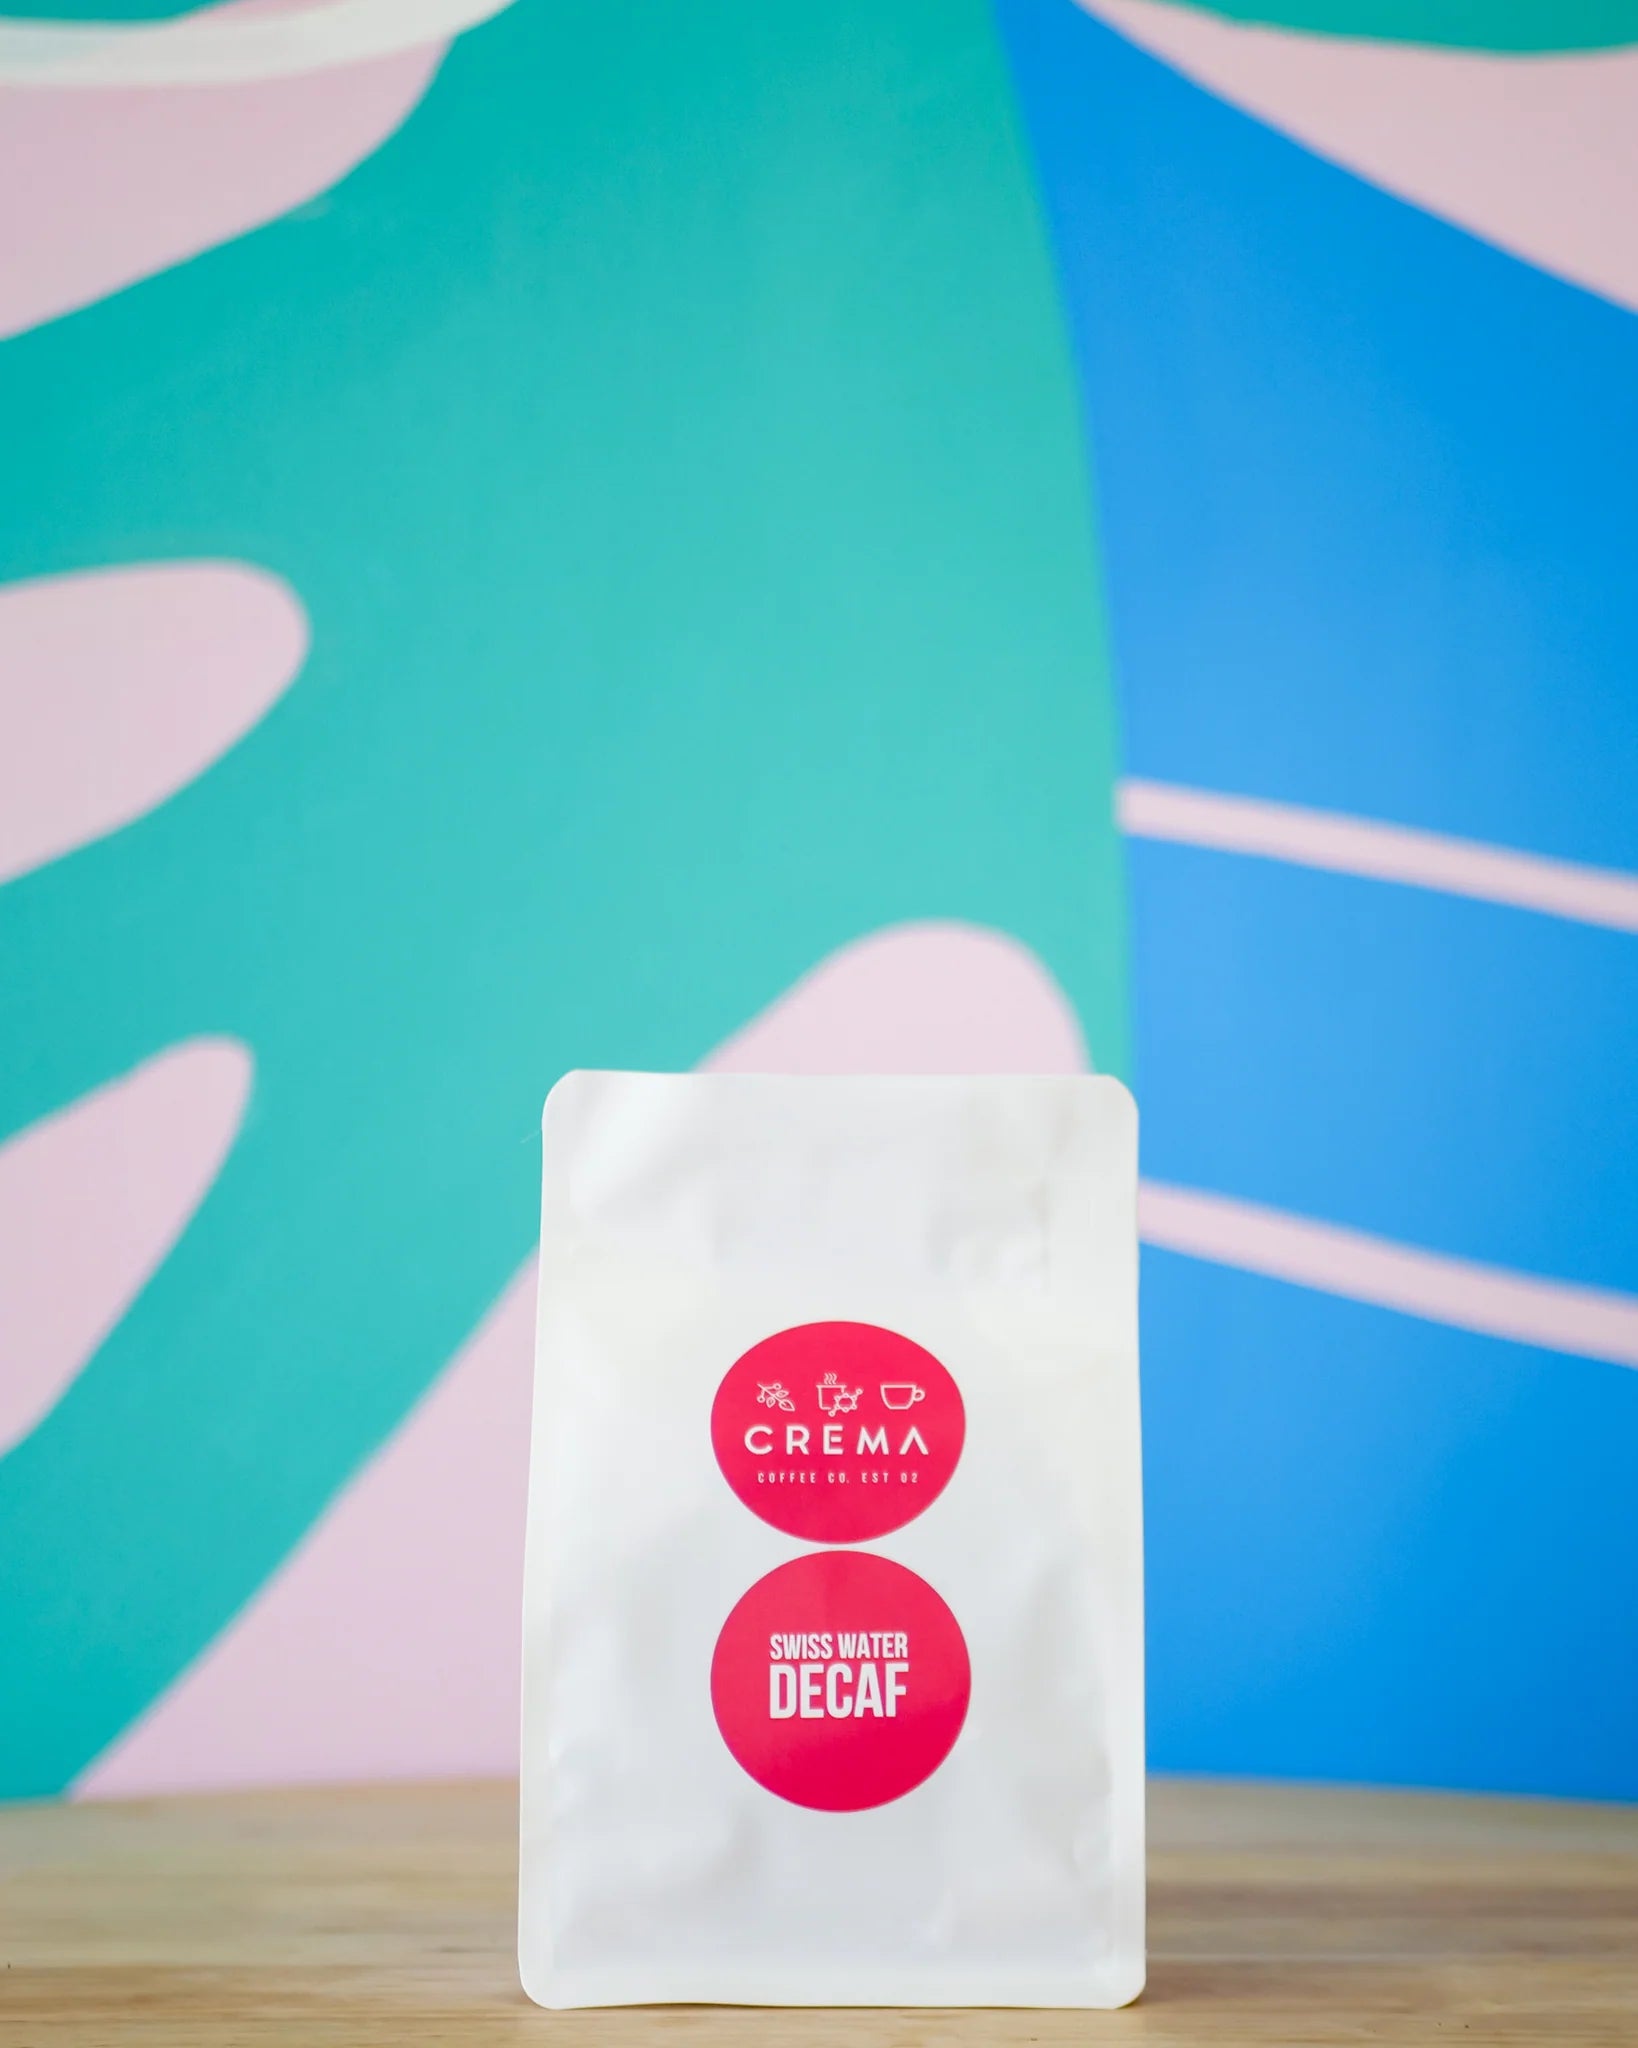 Crema Decaf Coffee Beans 500g Bag